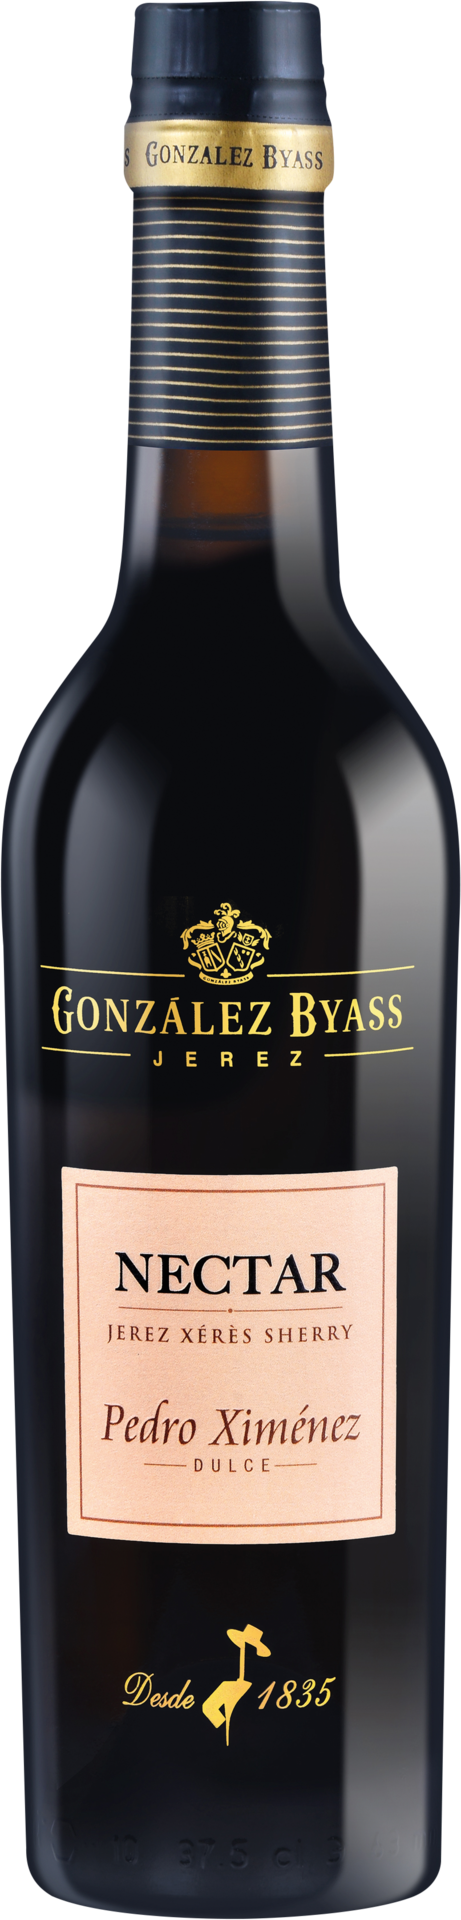 Gonzalez Byass Nectar 